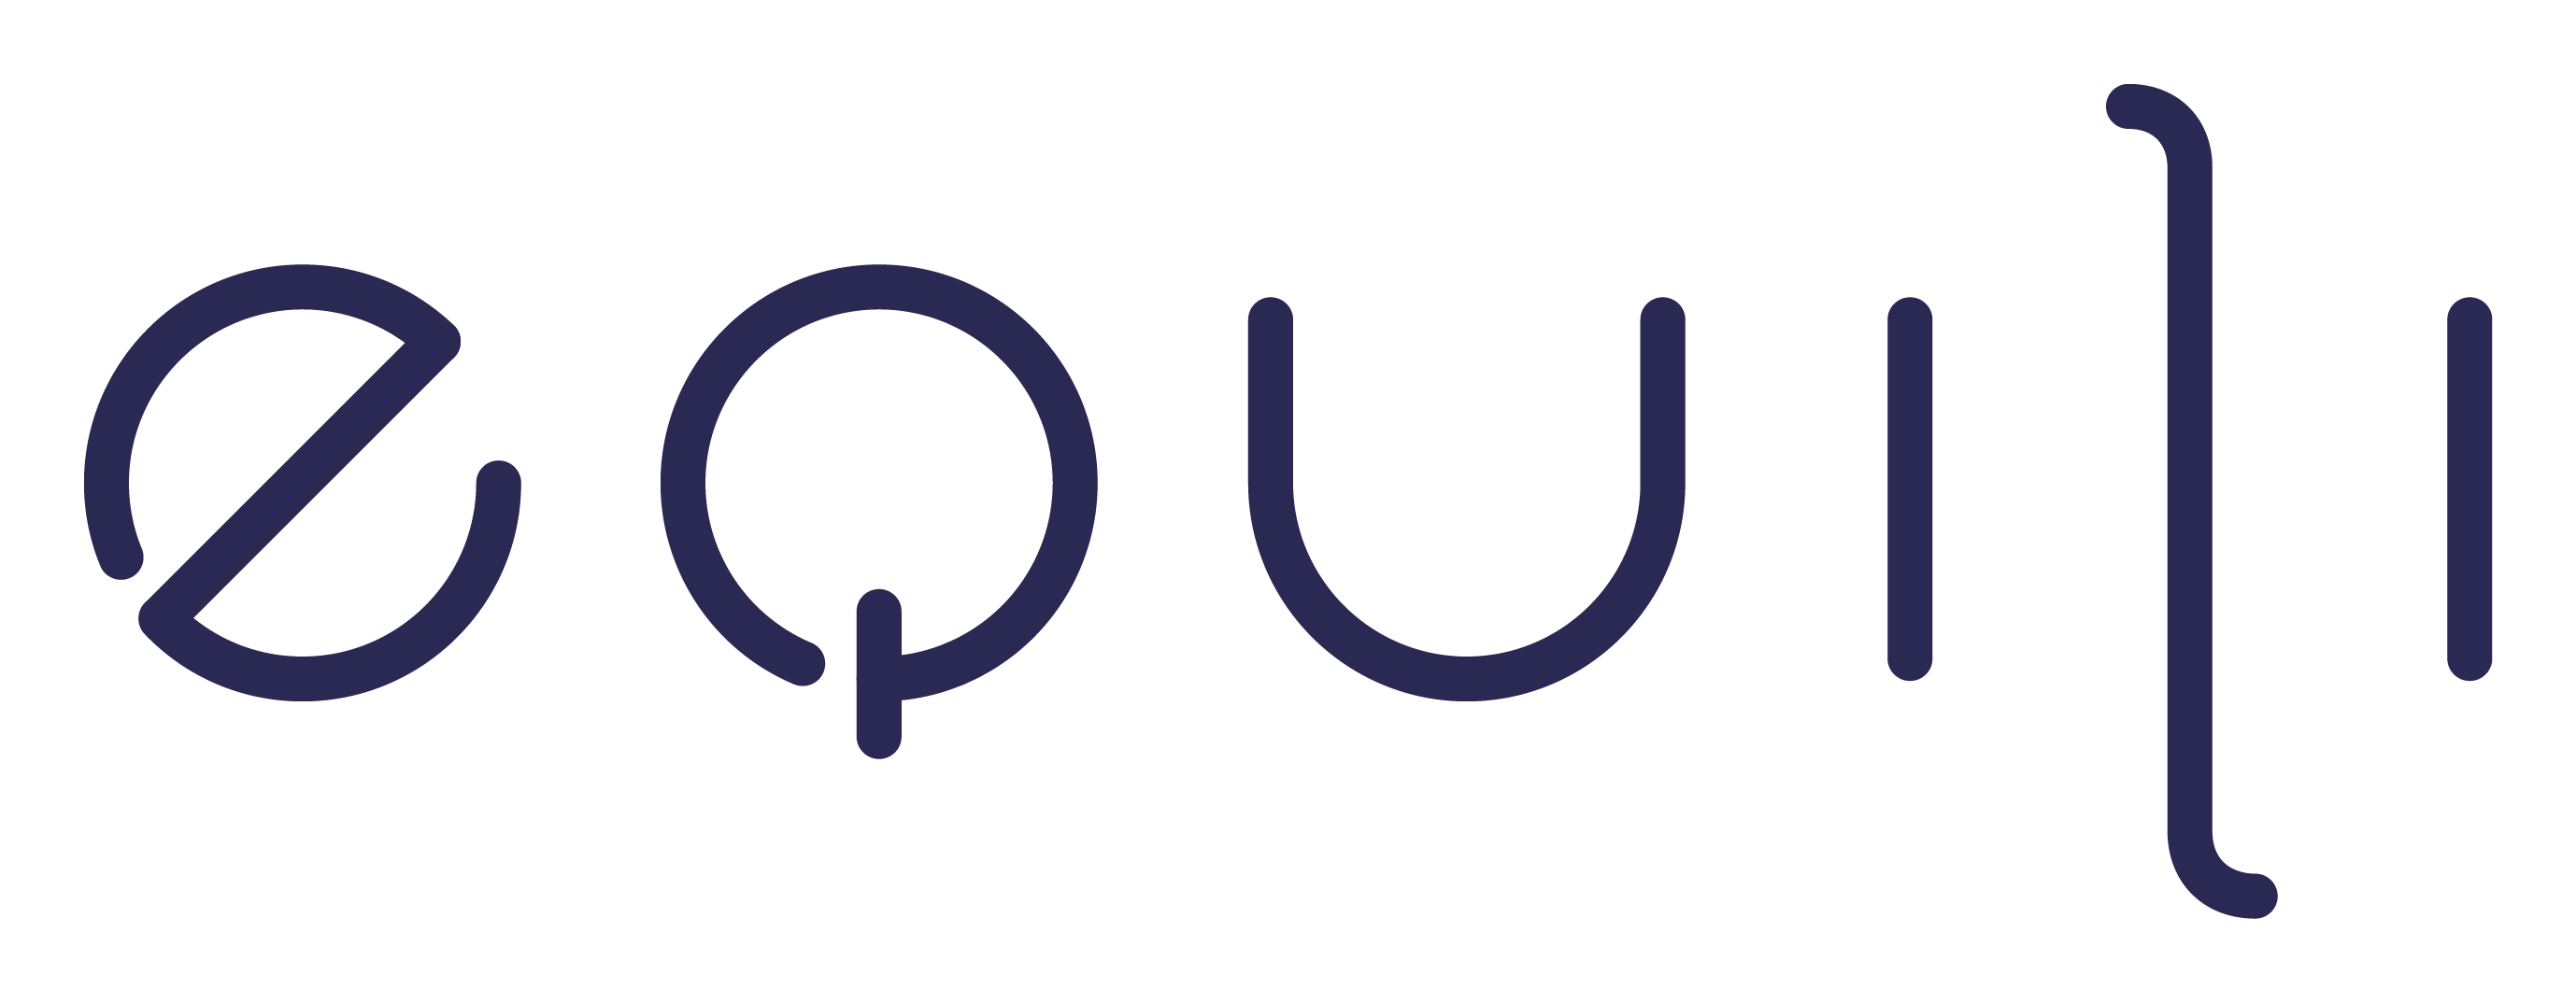 https://soundadvicewomen.com/wp-content/uploads/2019/09/Equili-Logo-Full-Set_equili-navy-1.png